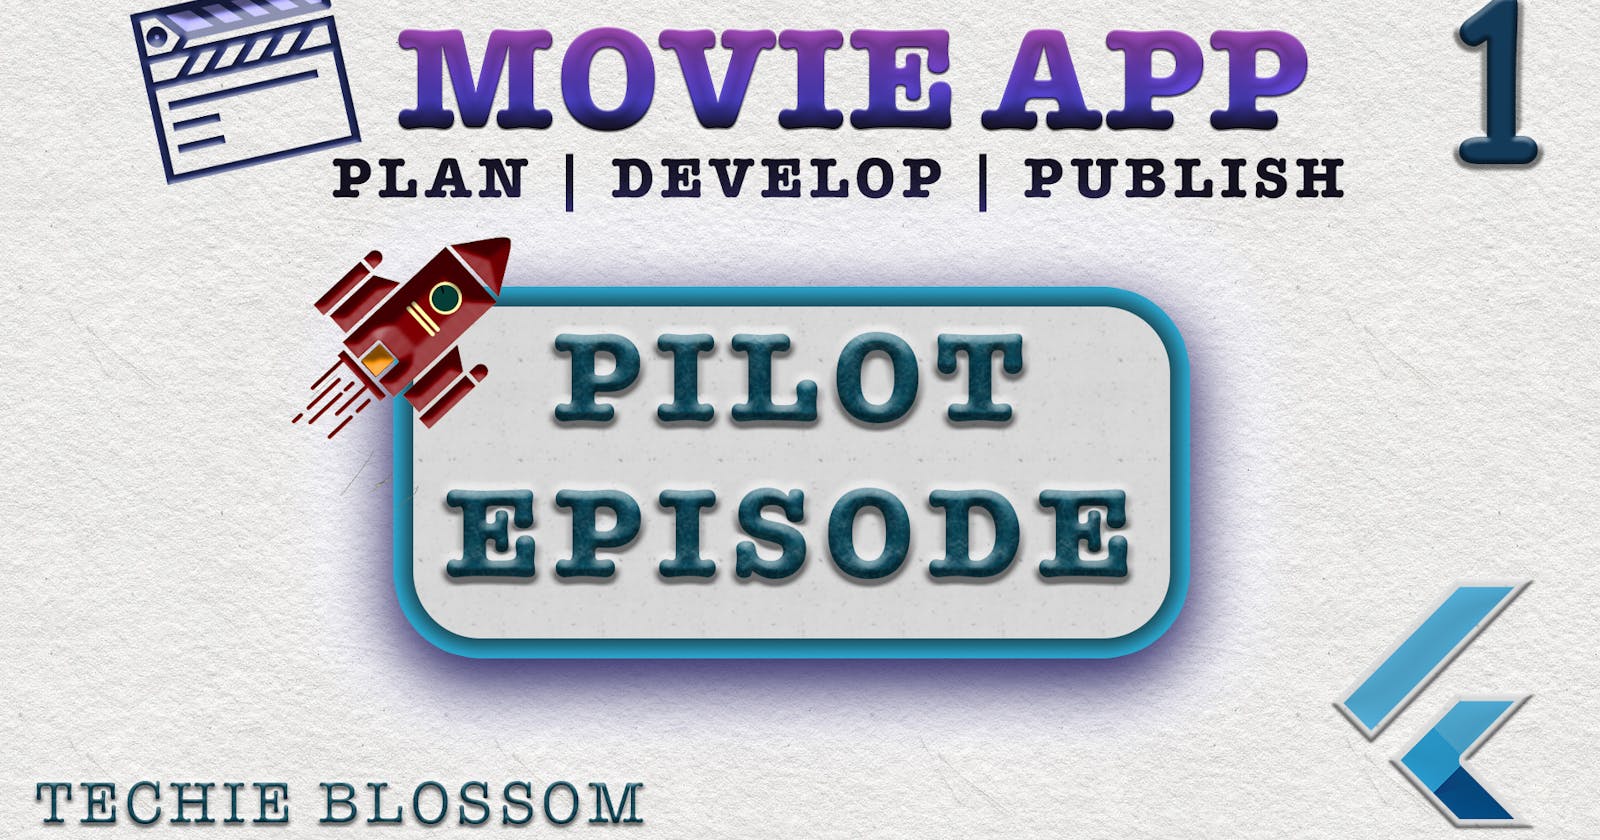 1. Pilot Episode